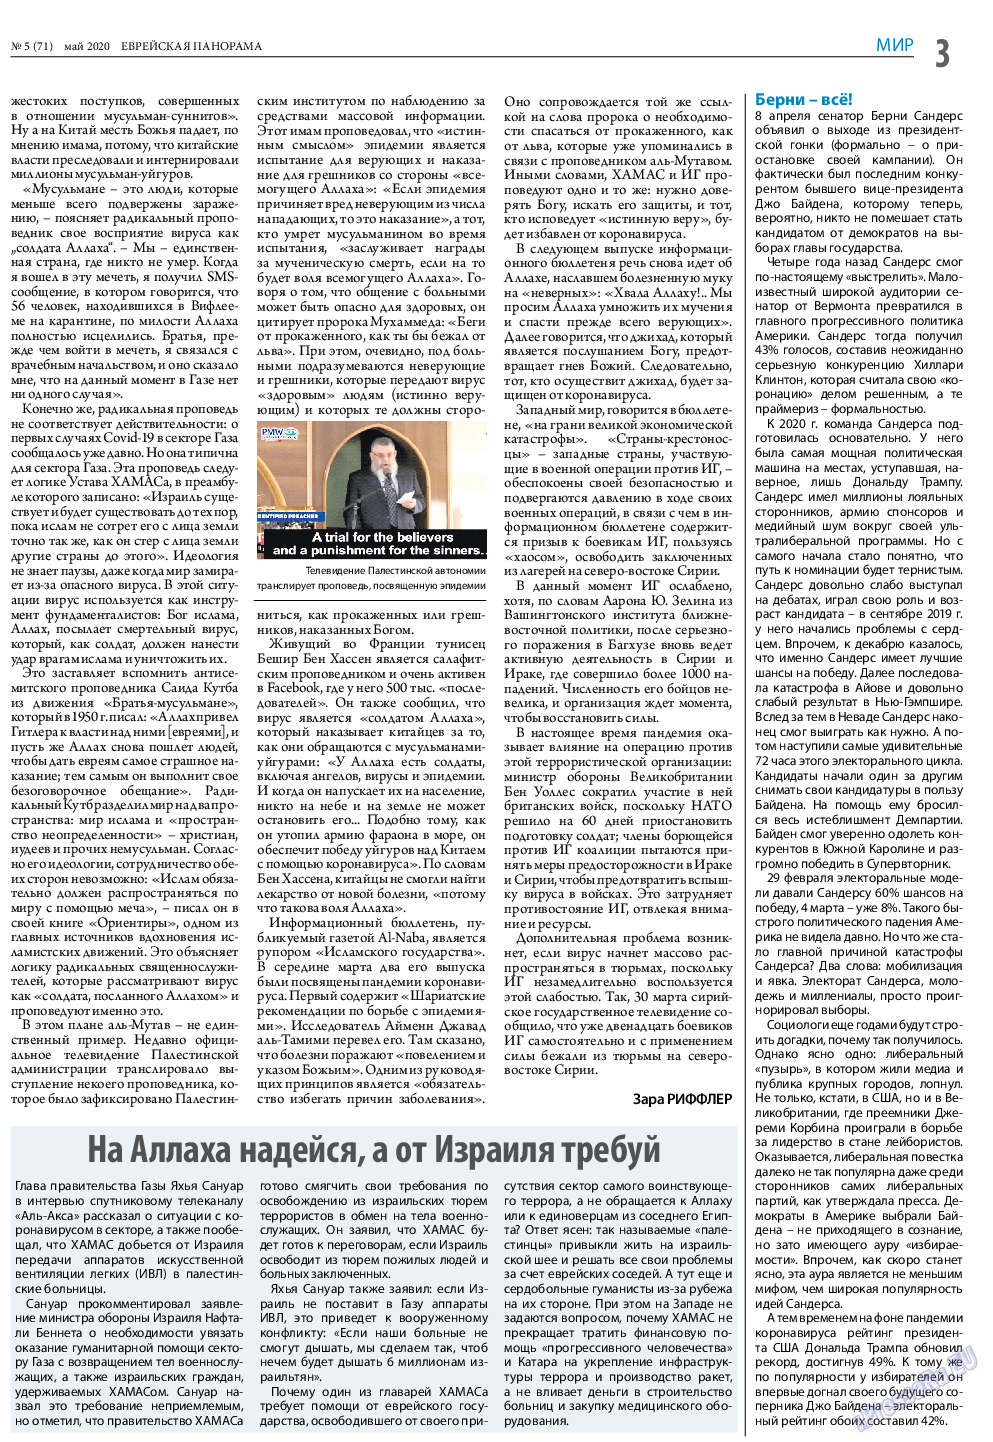 Еврейская панорама, газета. 2020 №5 стр.3